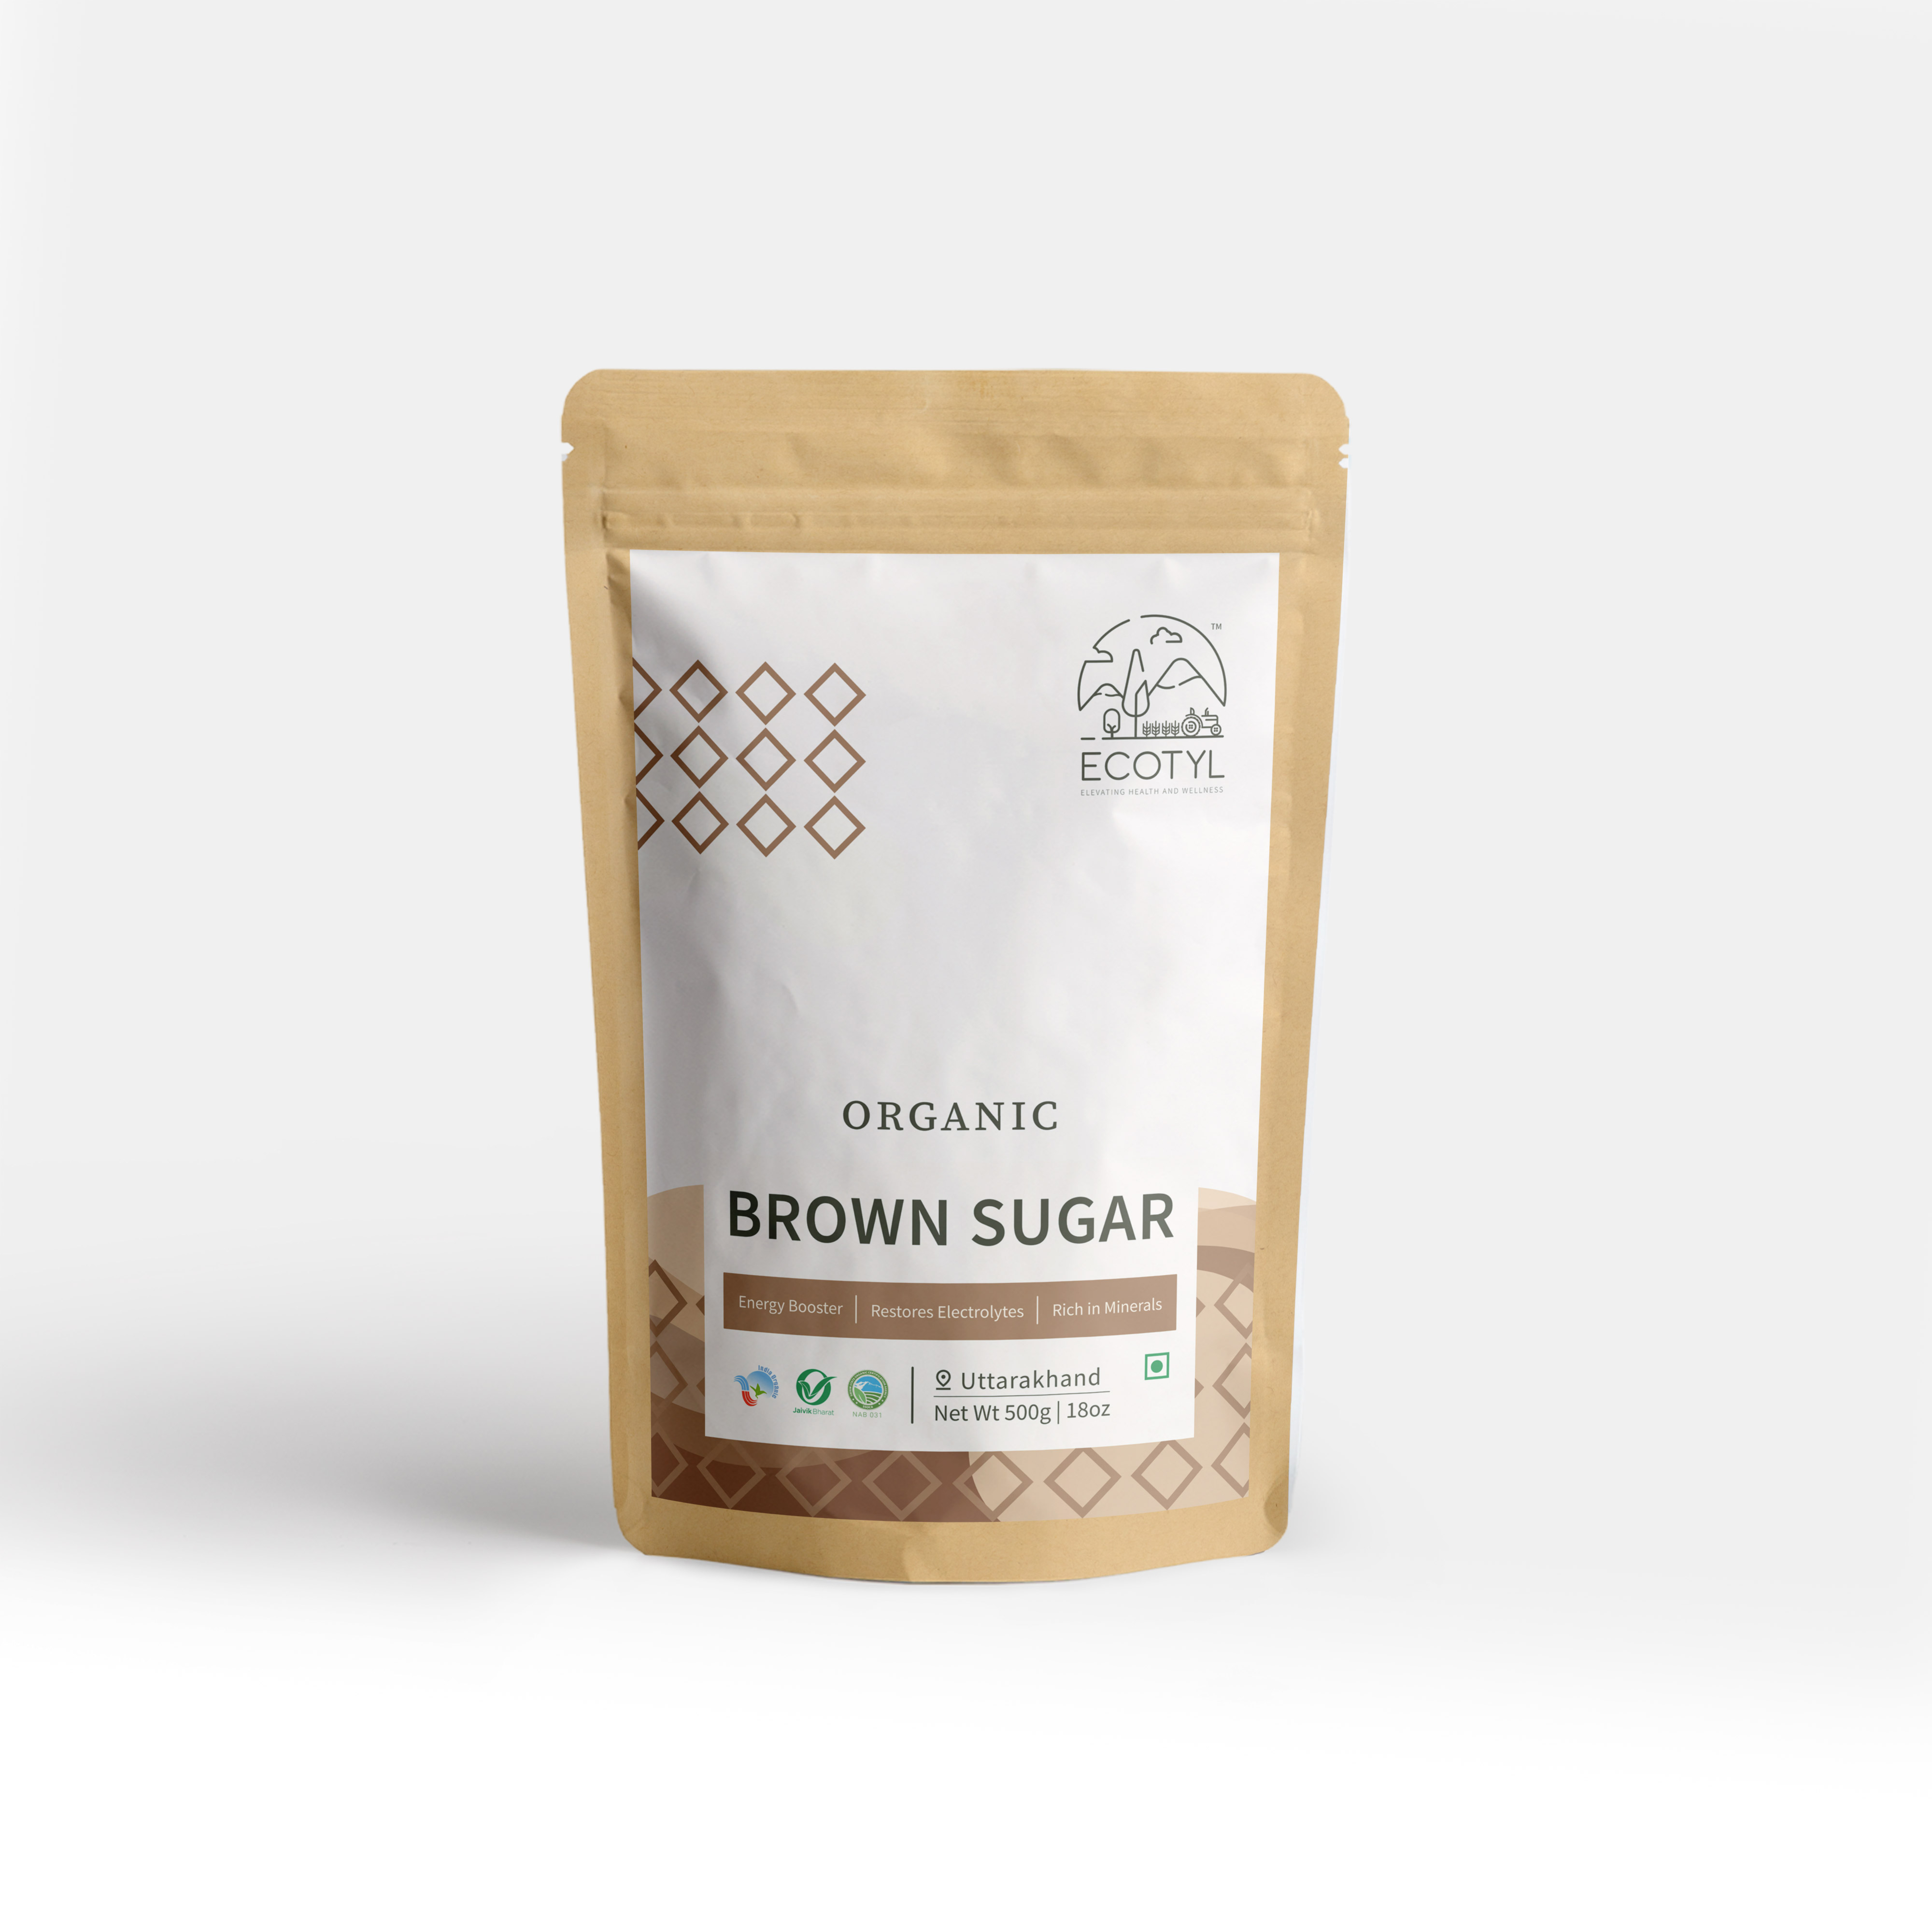 Buy Ecotyl Organic Brown Sugar - 500 g at Best Price Online